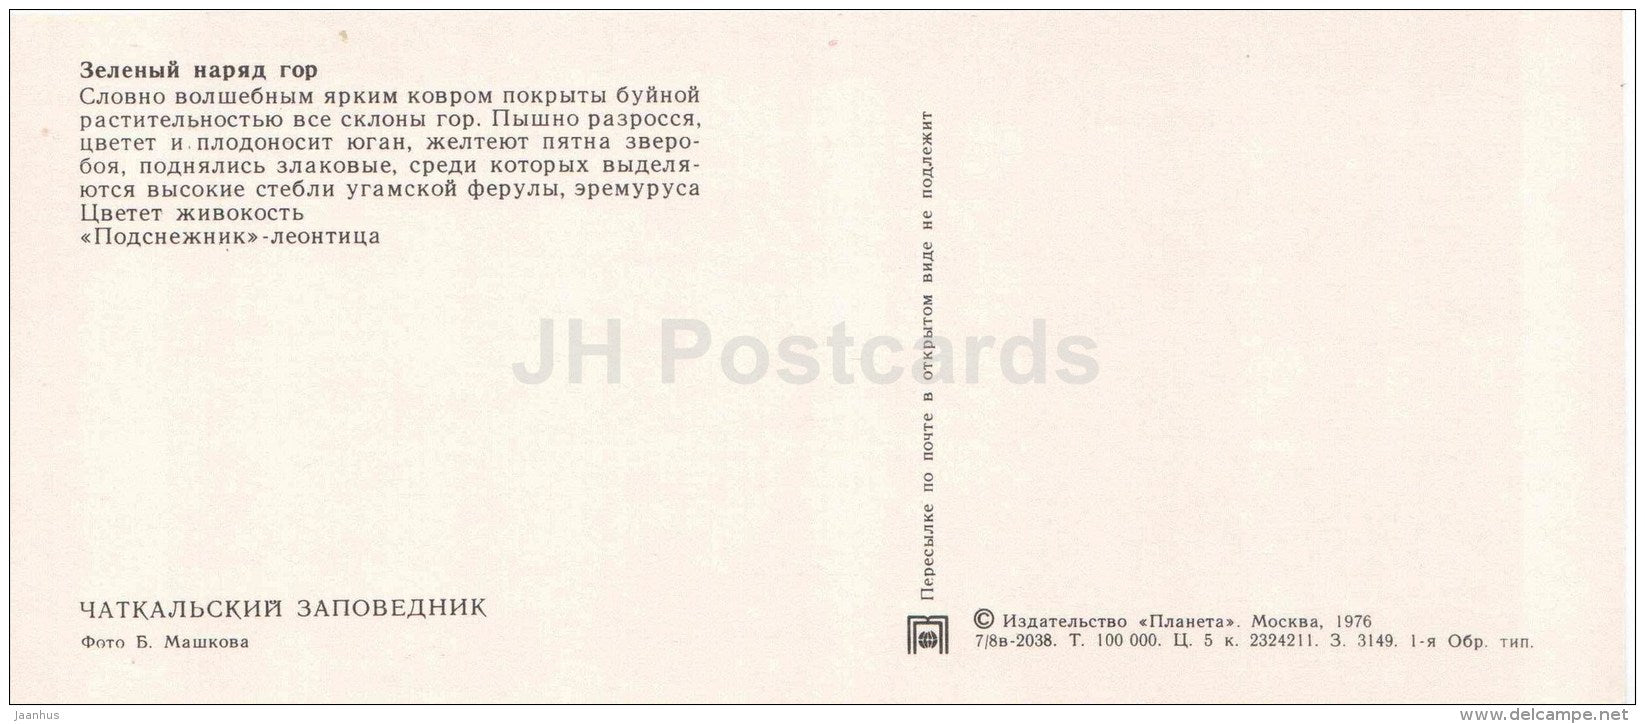 Tutsan - Hypericum - Chatkalsky National Park - 1976 - Uzbekistan USSR - unused - JH Postcards